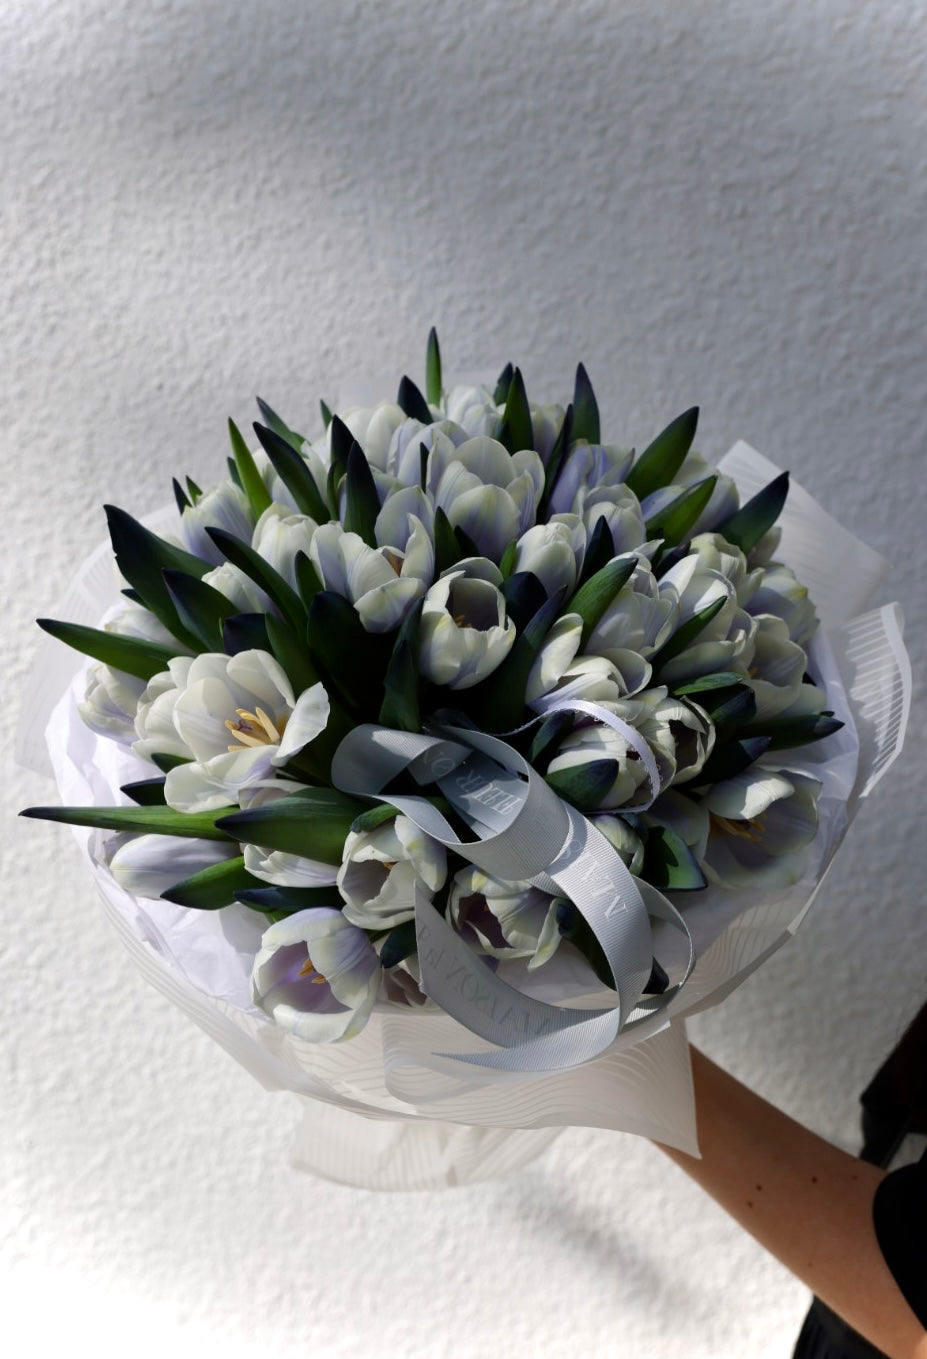 50 shades of grey - 50 Dutch color enhanced tulips